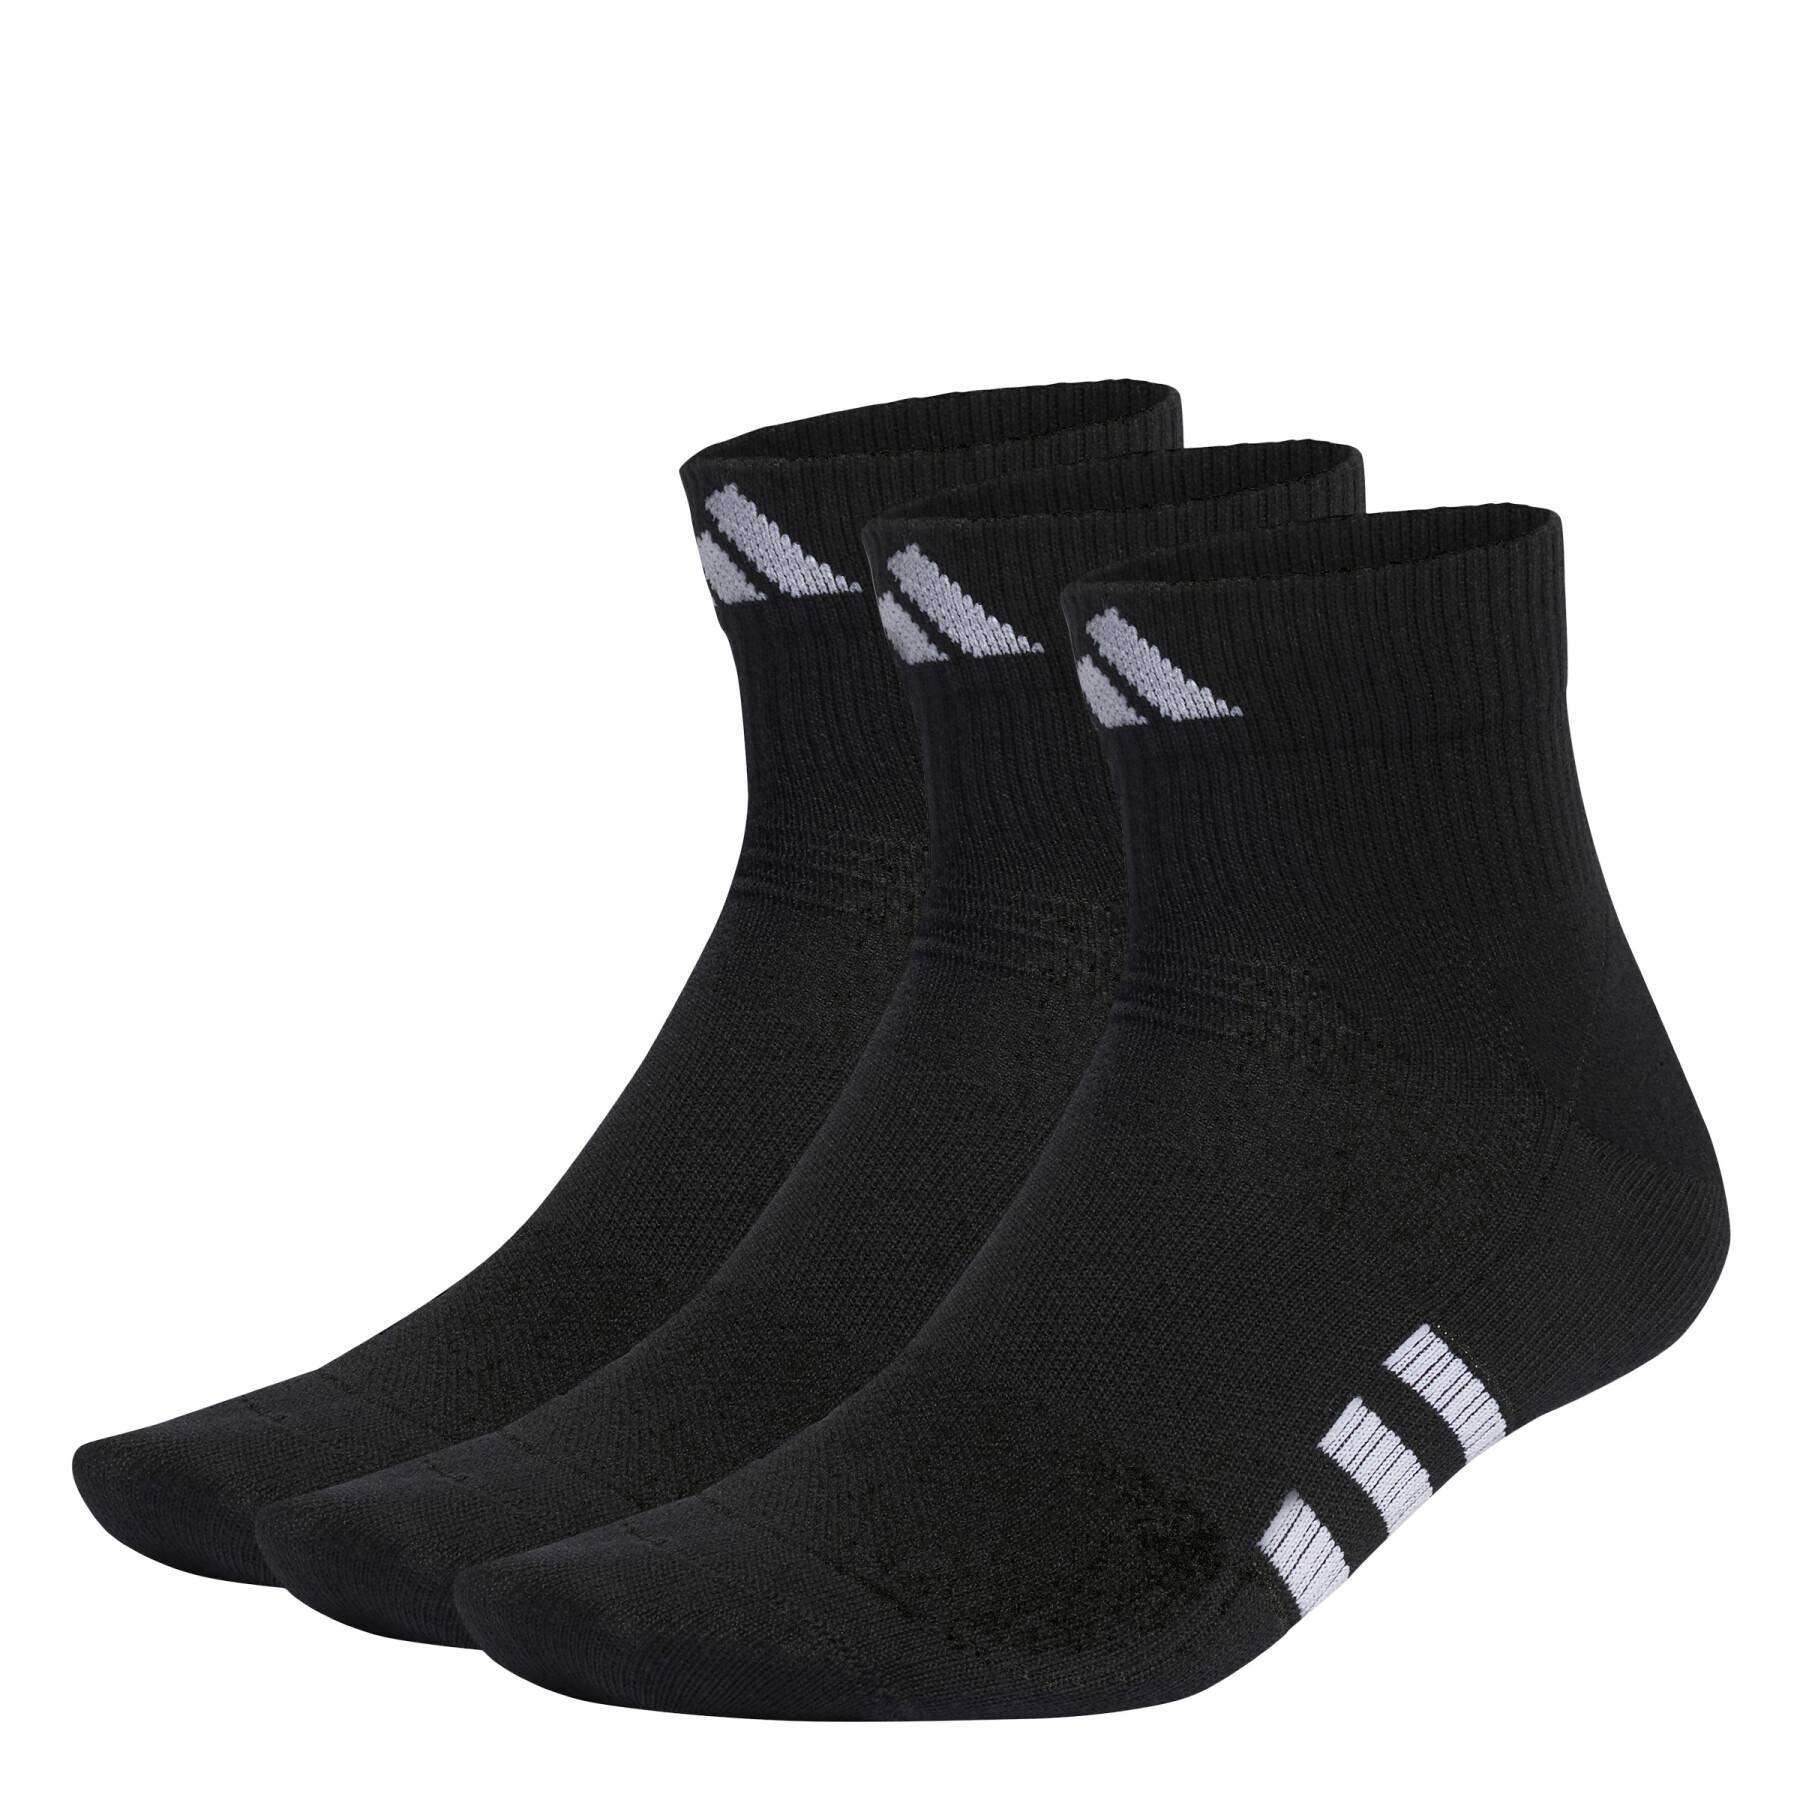 Children's knee-high socks adidas Performance Light (x3)